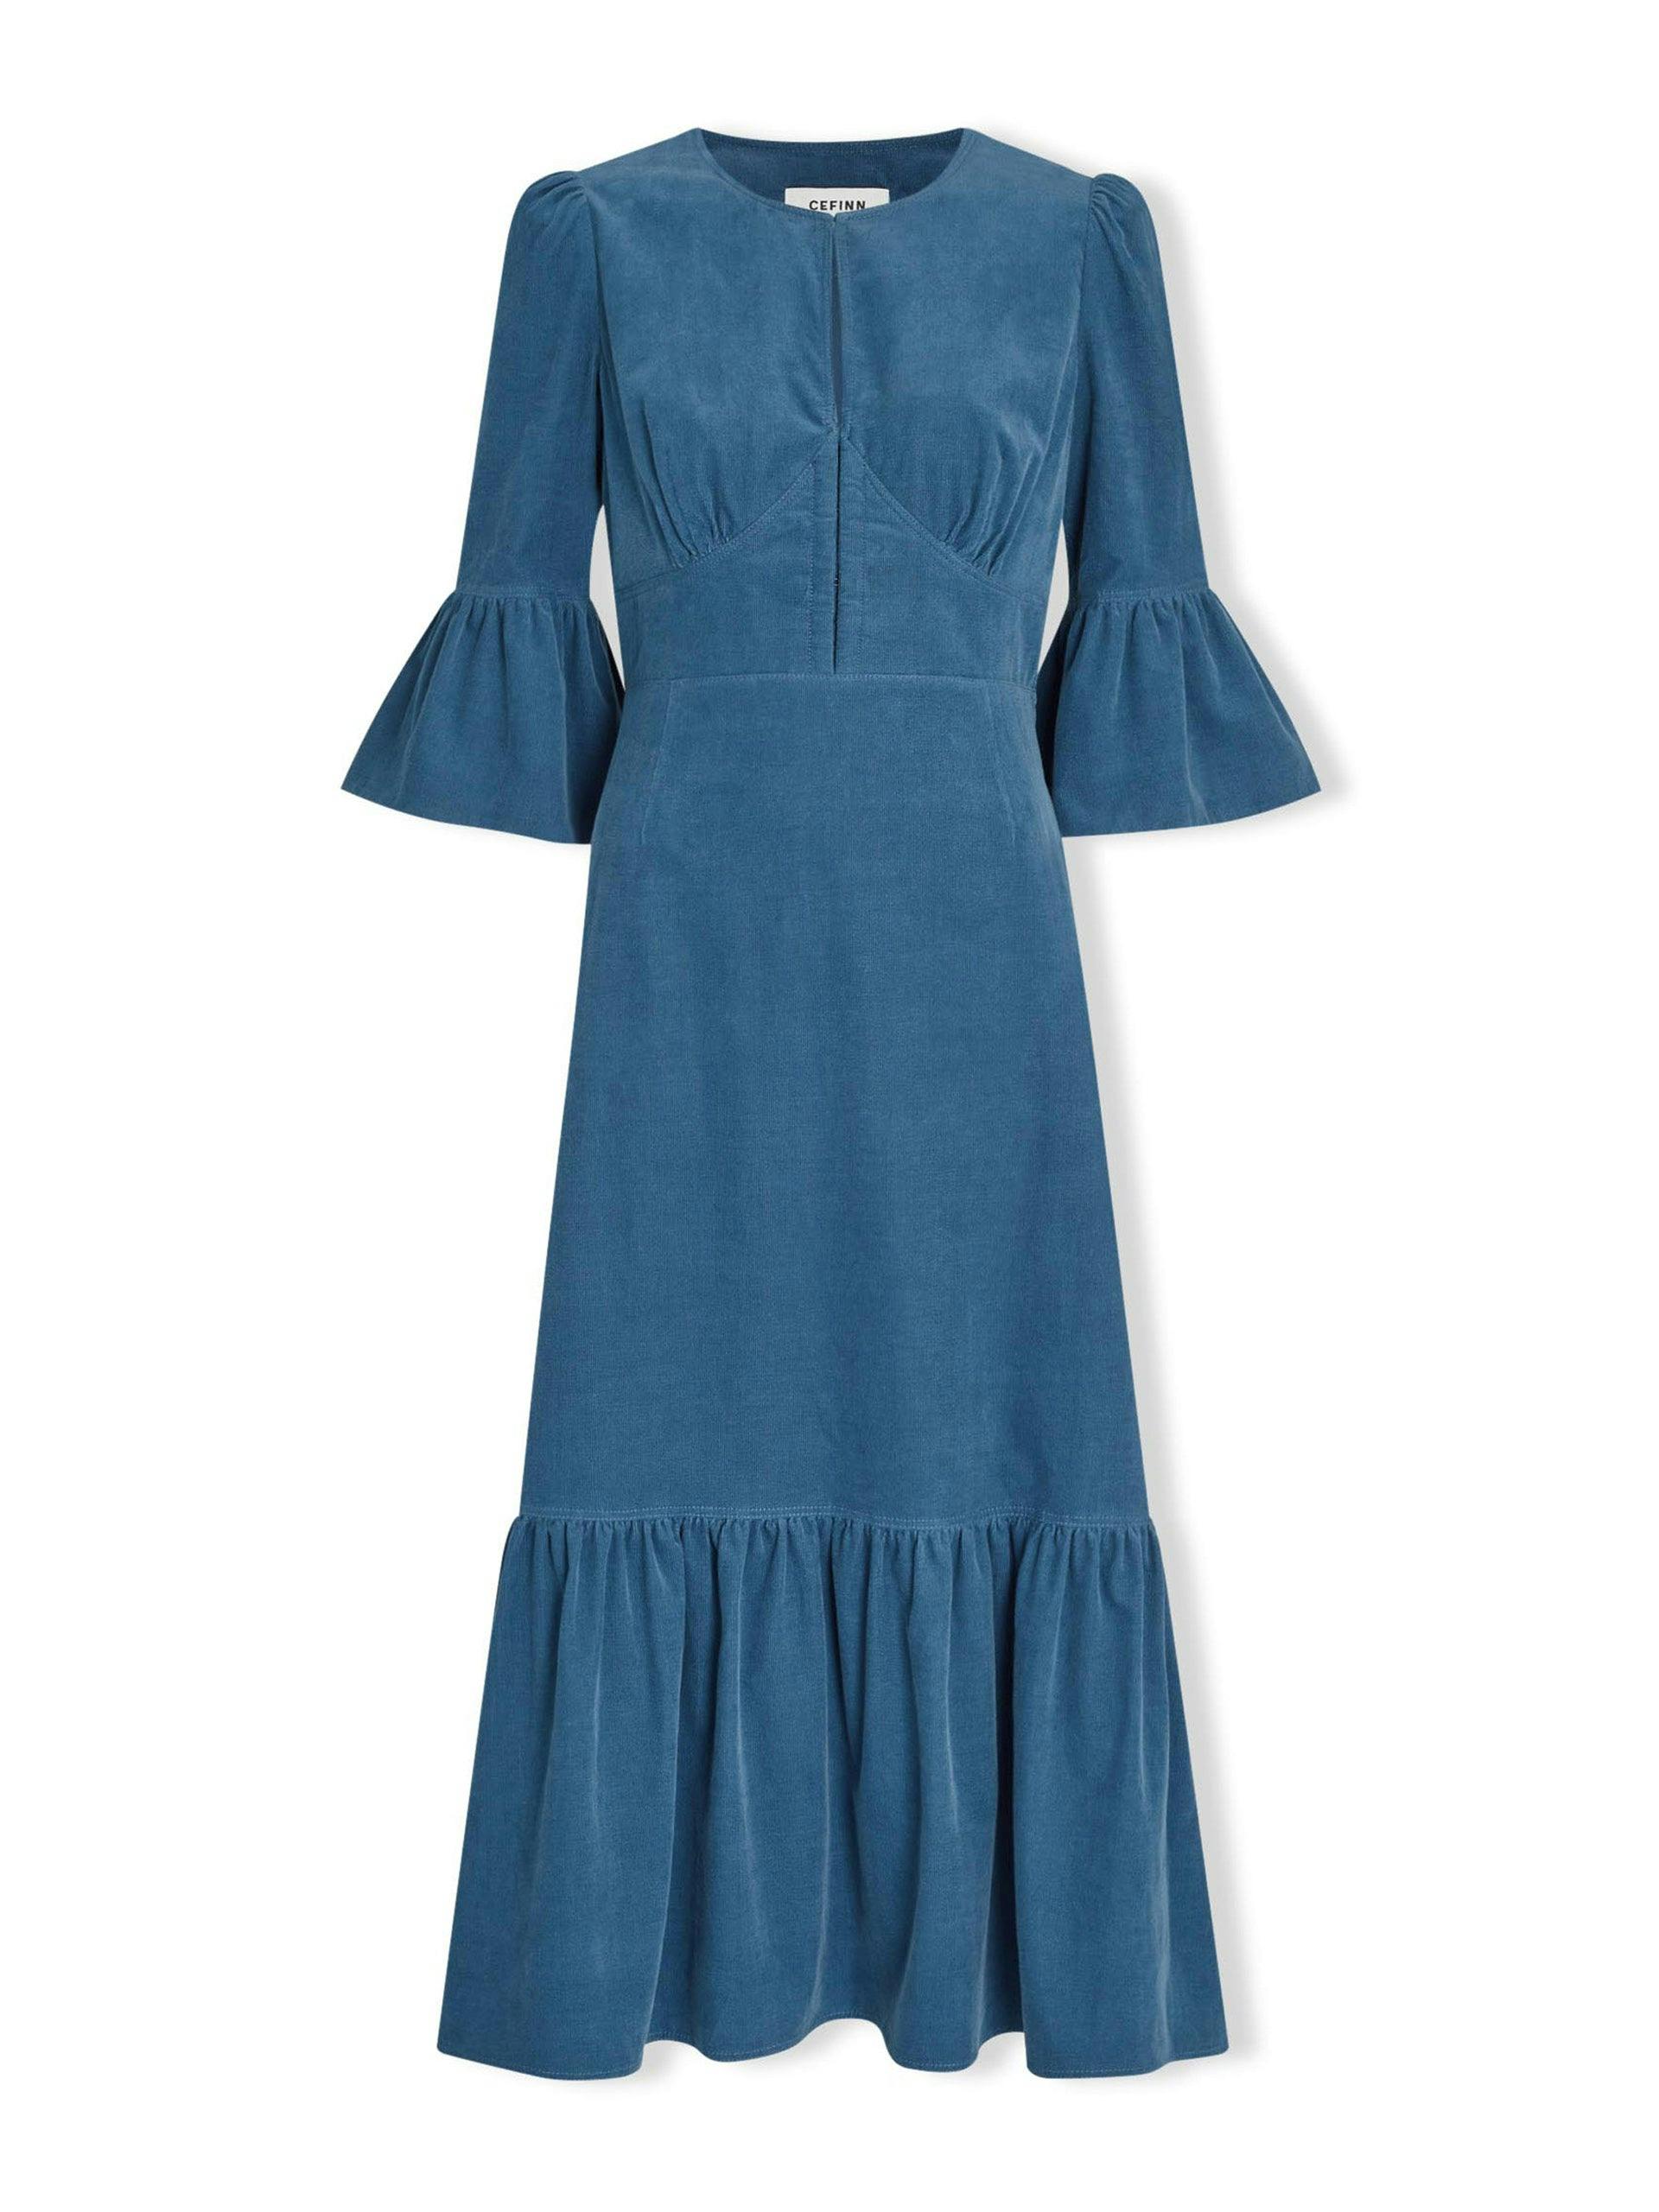 Daphne round neck mid-blue pin corduroy dress